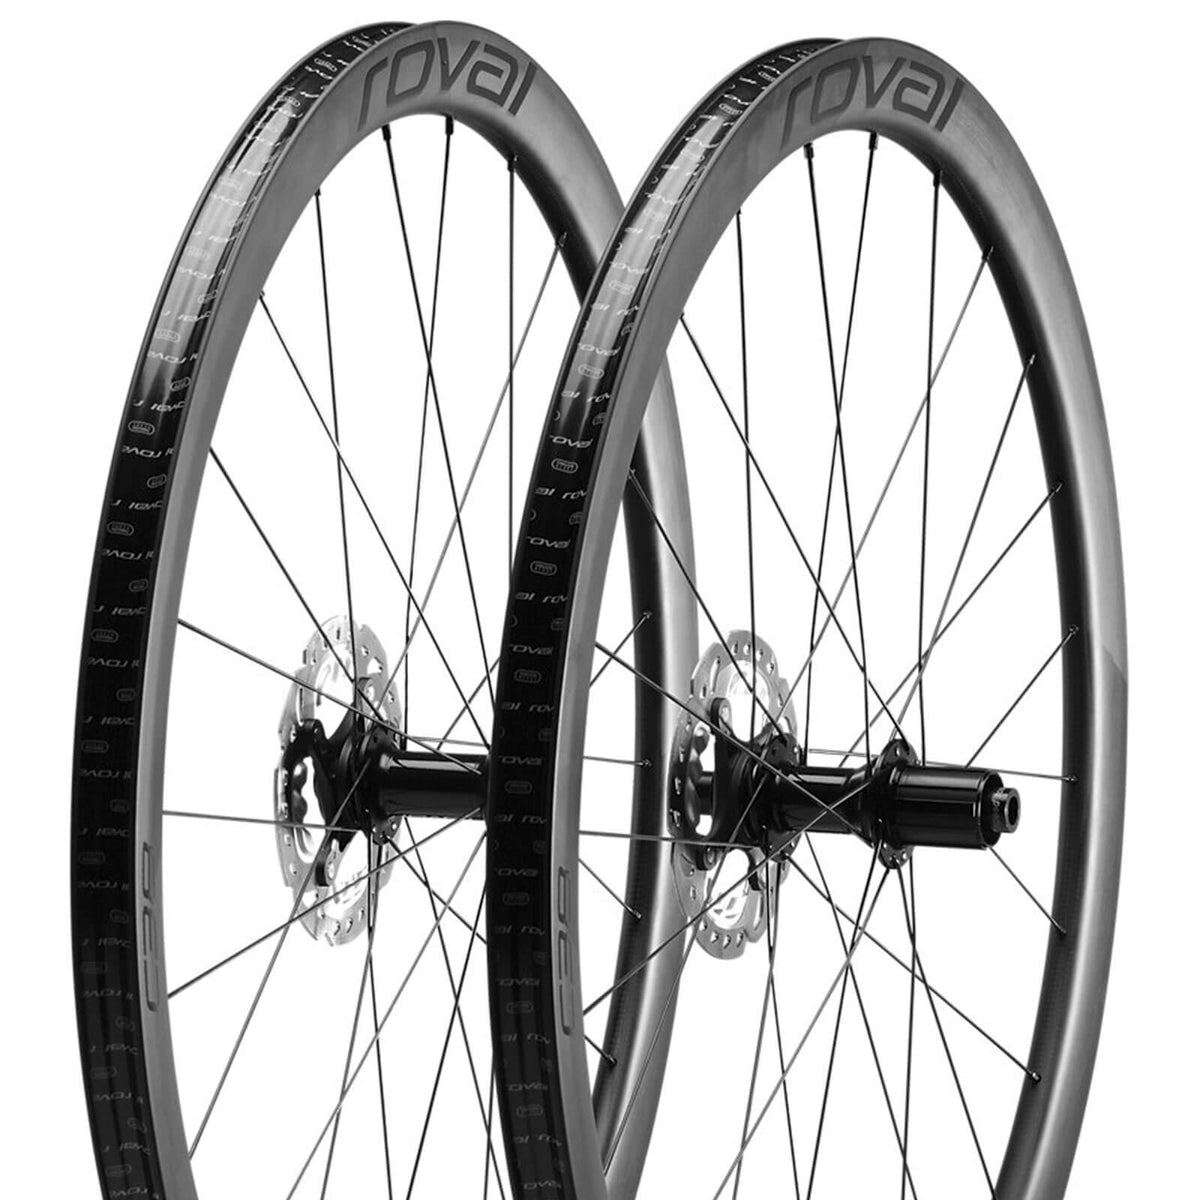 bike wheel components